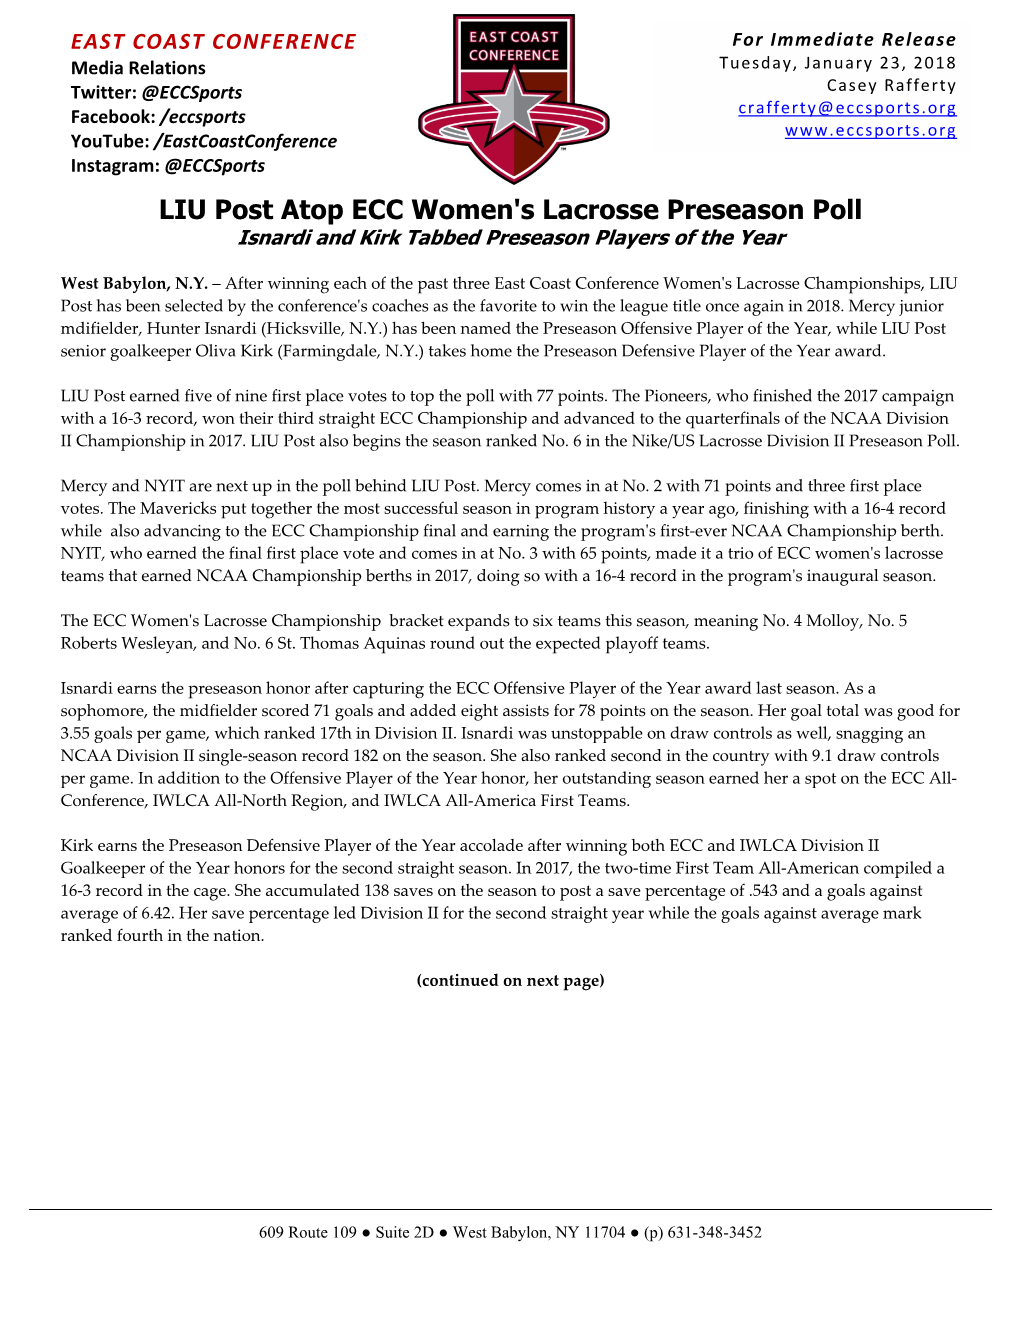 LIU Post Atop ECC Women's Lacrosse Preseason Poll Isnardi and Kirk Tabbed Preseason Players of the Year